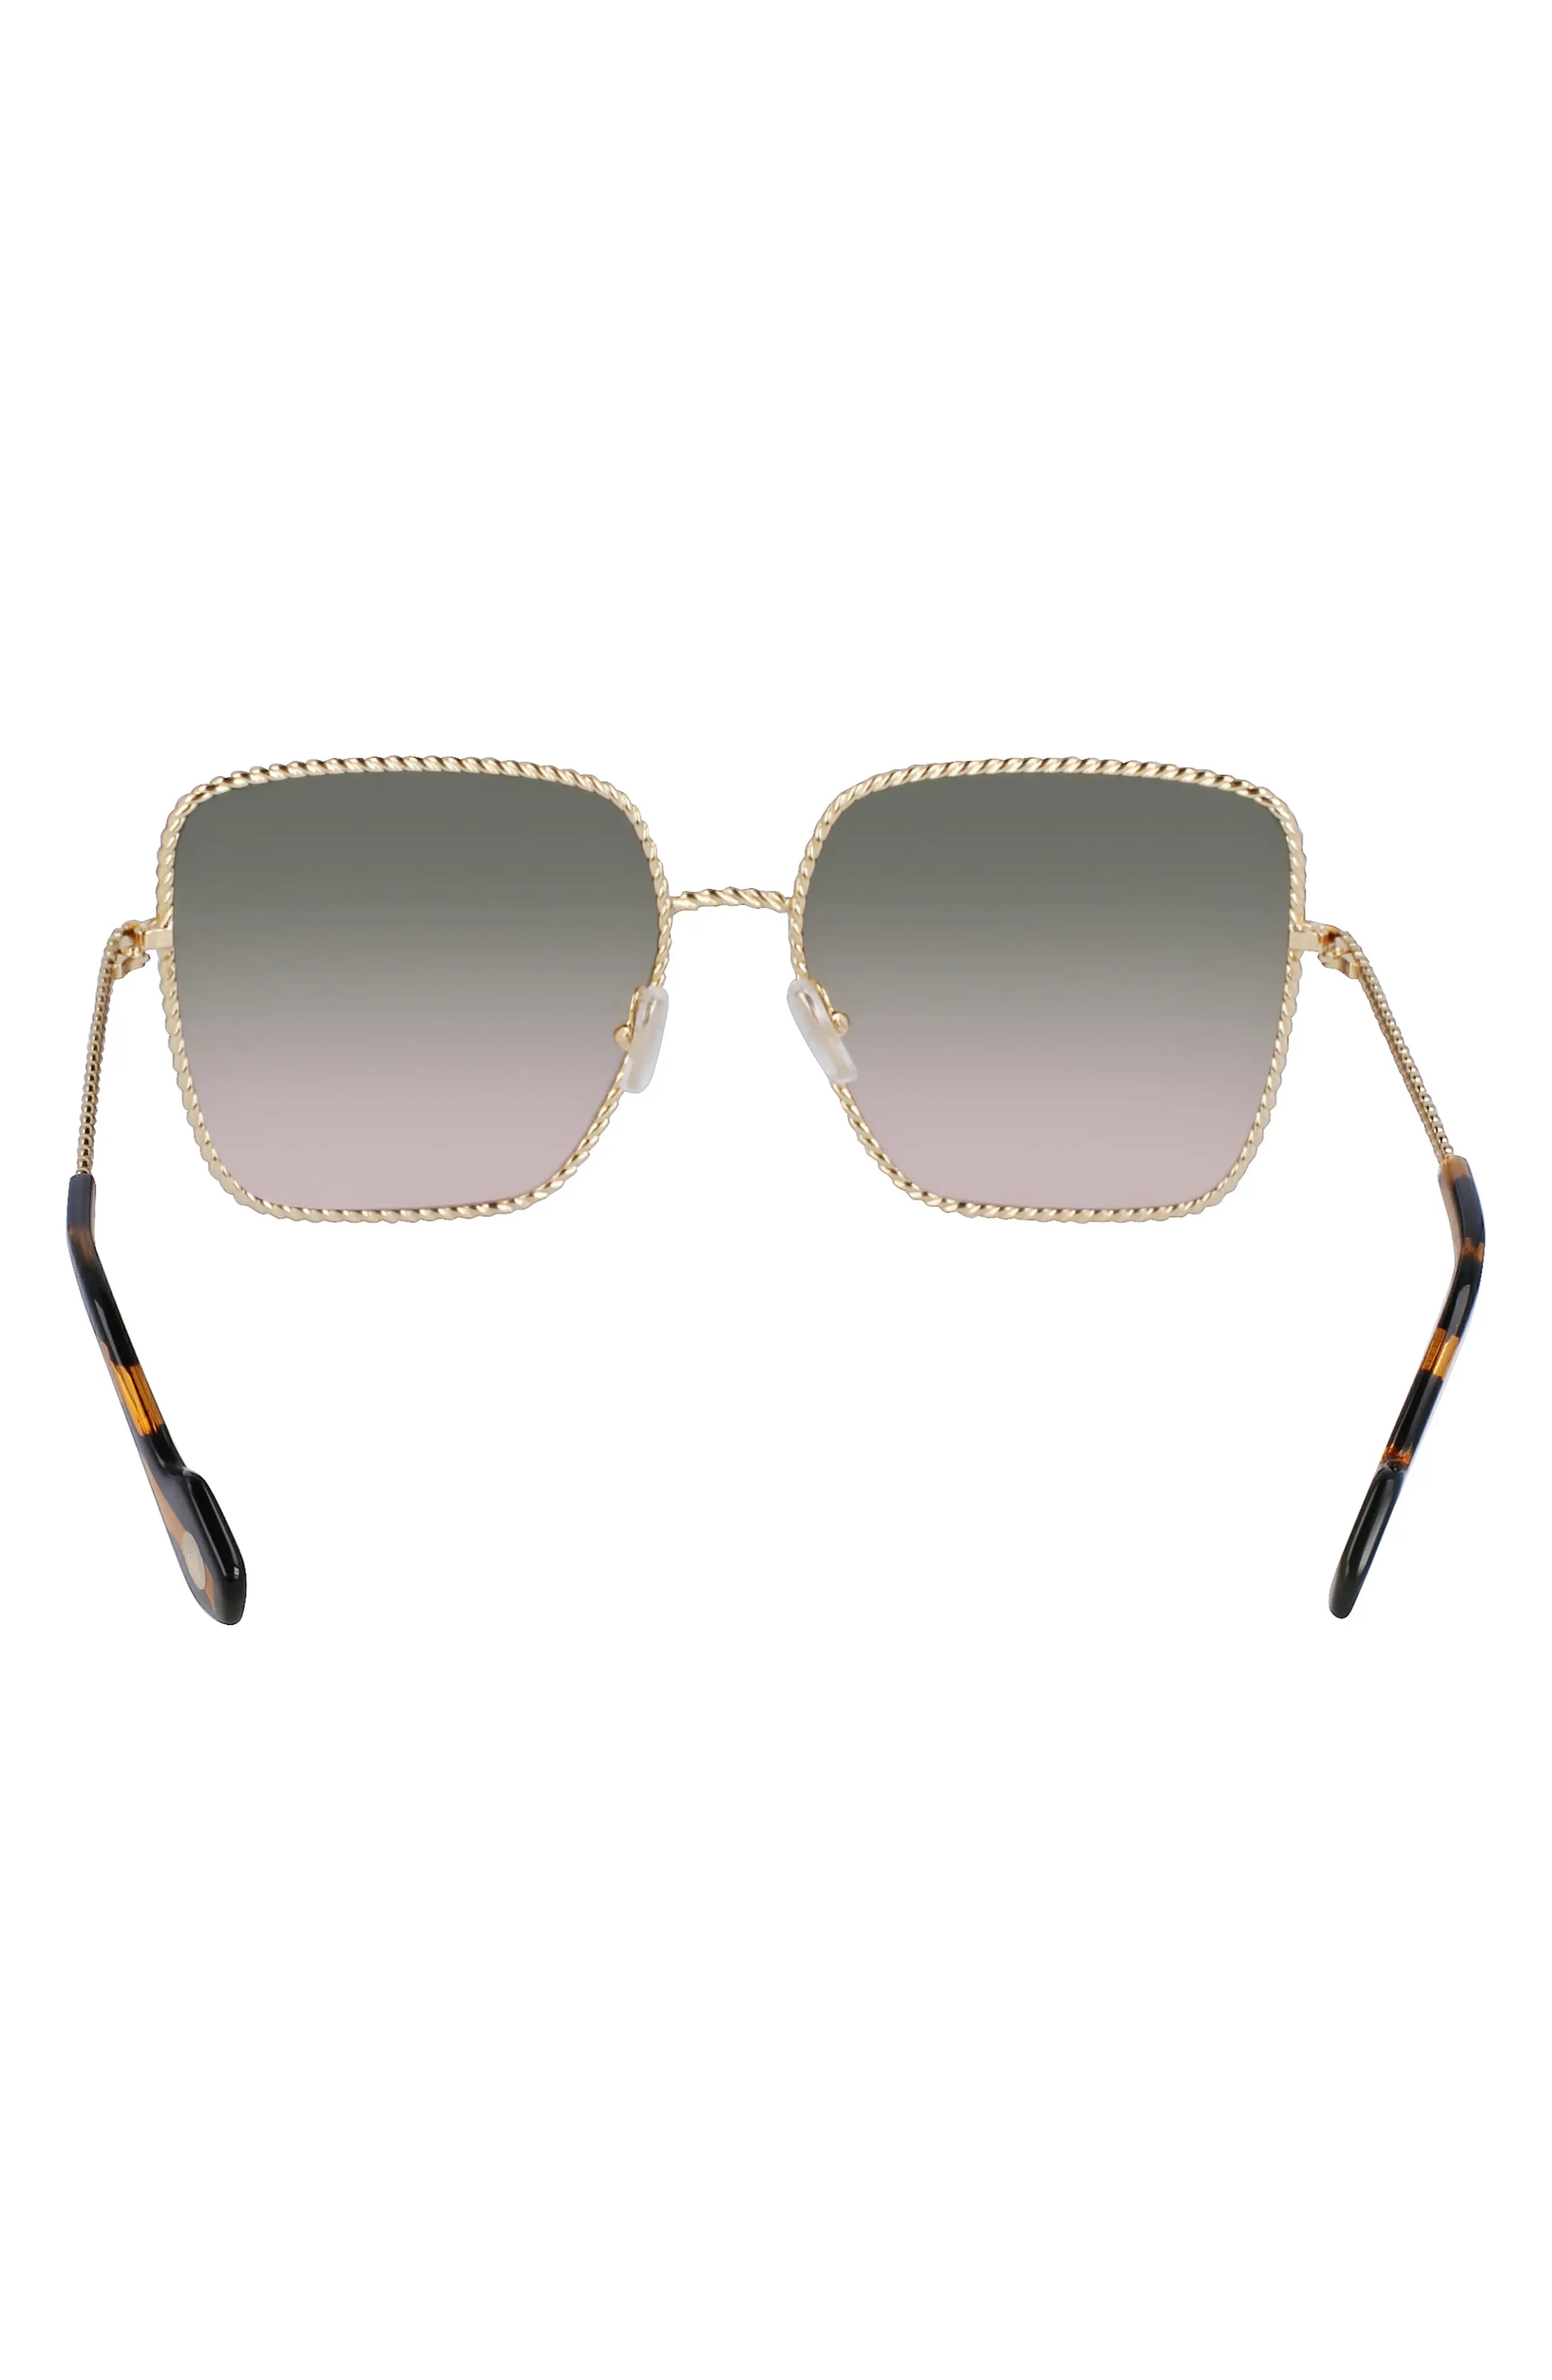 Babe 59mm Gradient Square Sunglasses in Gold/Gradient Green Peach - 4